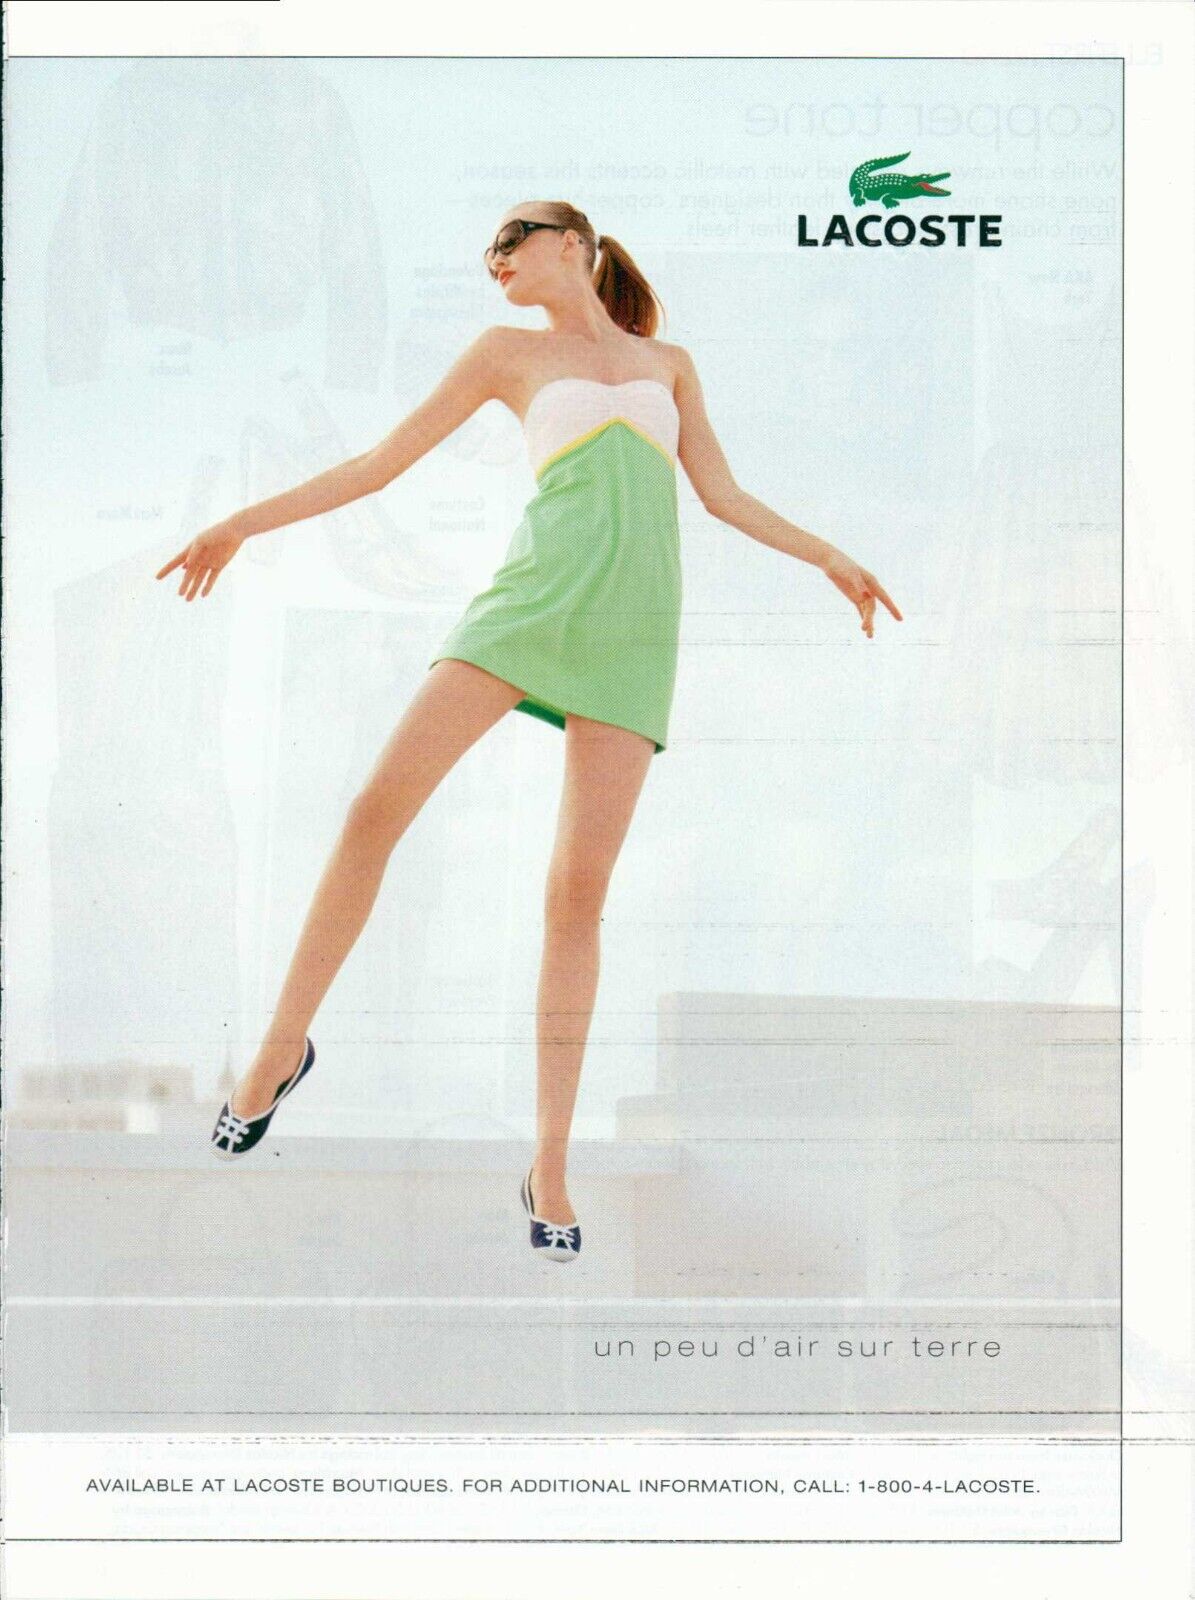 LACOSTE Footwear Magazine Print Ad Advert long legs high heels shoes 2007